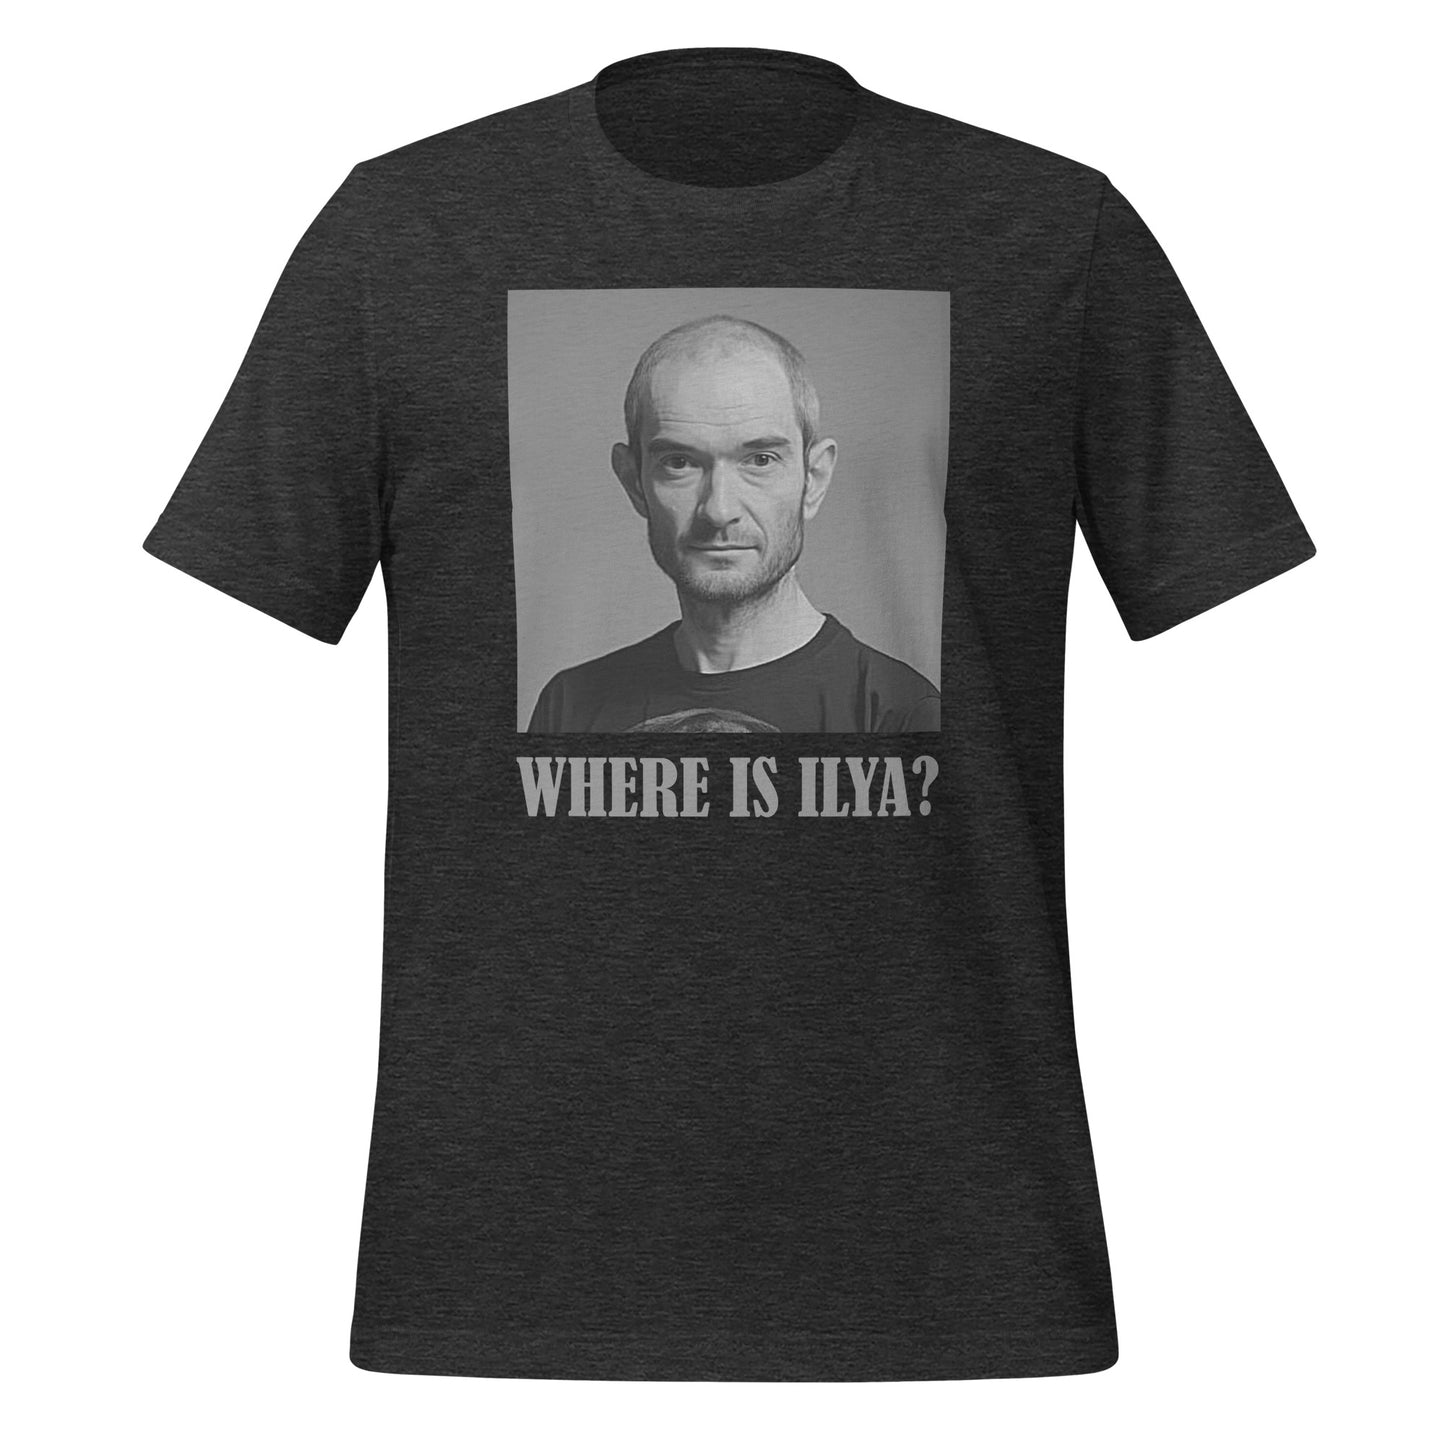 WHERE IS ILYA? T-Shirt 2 (unisex)